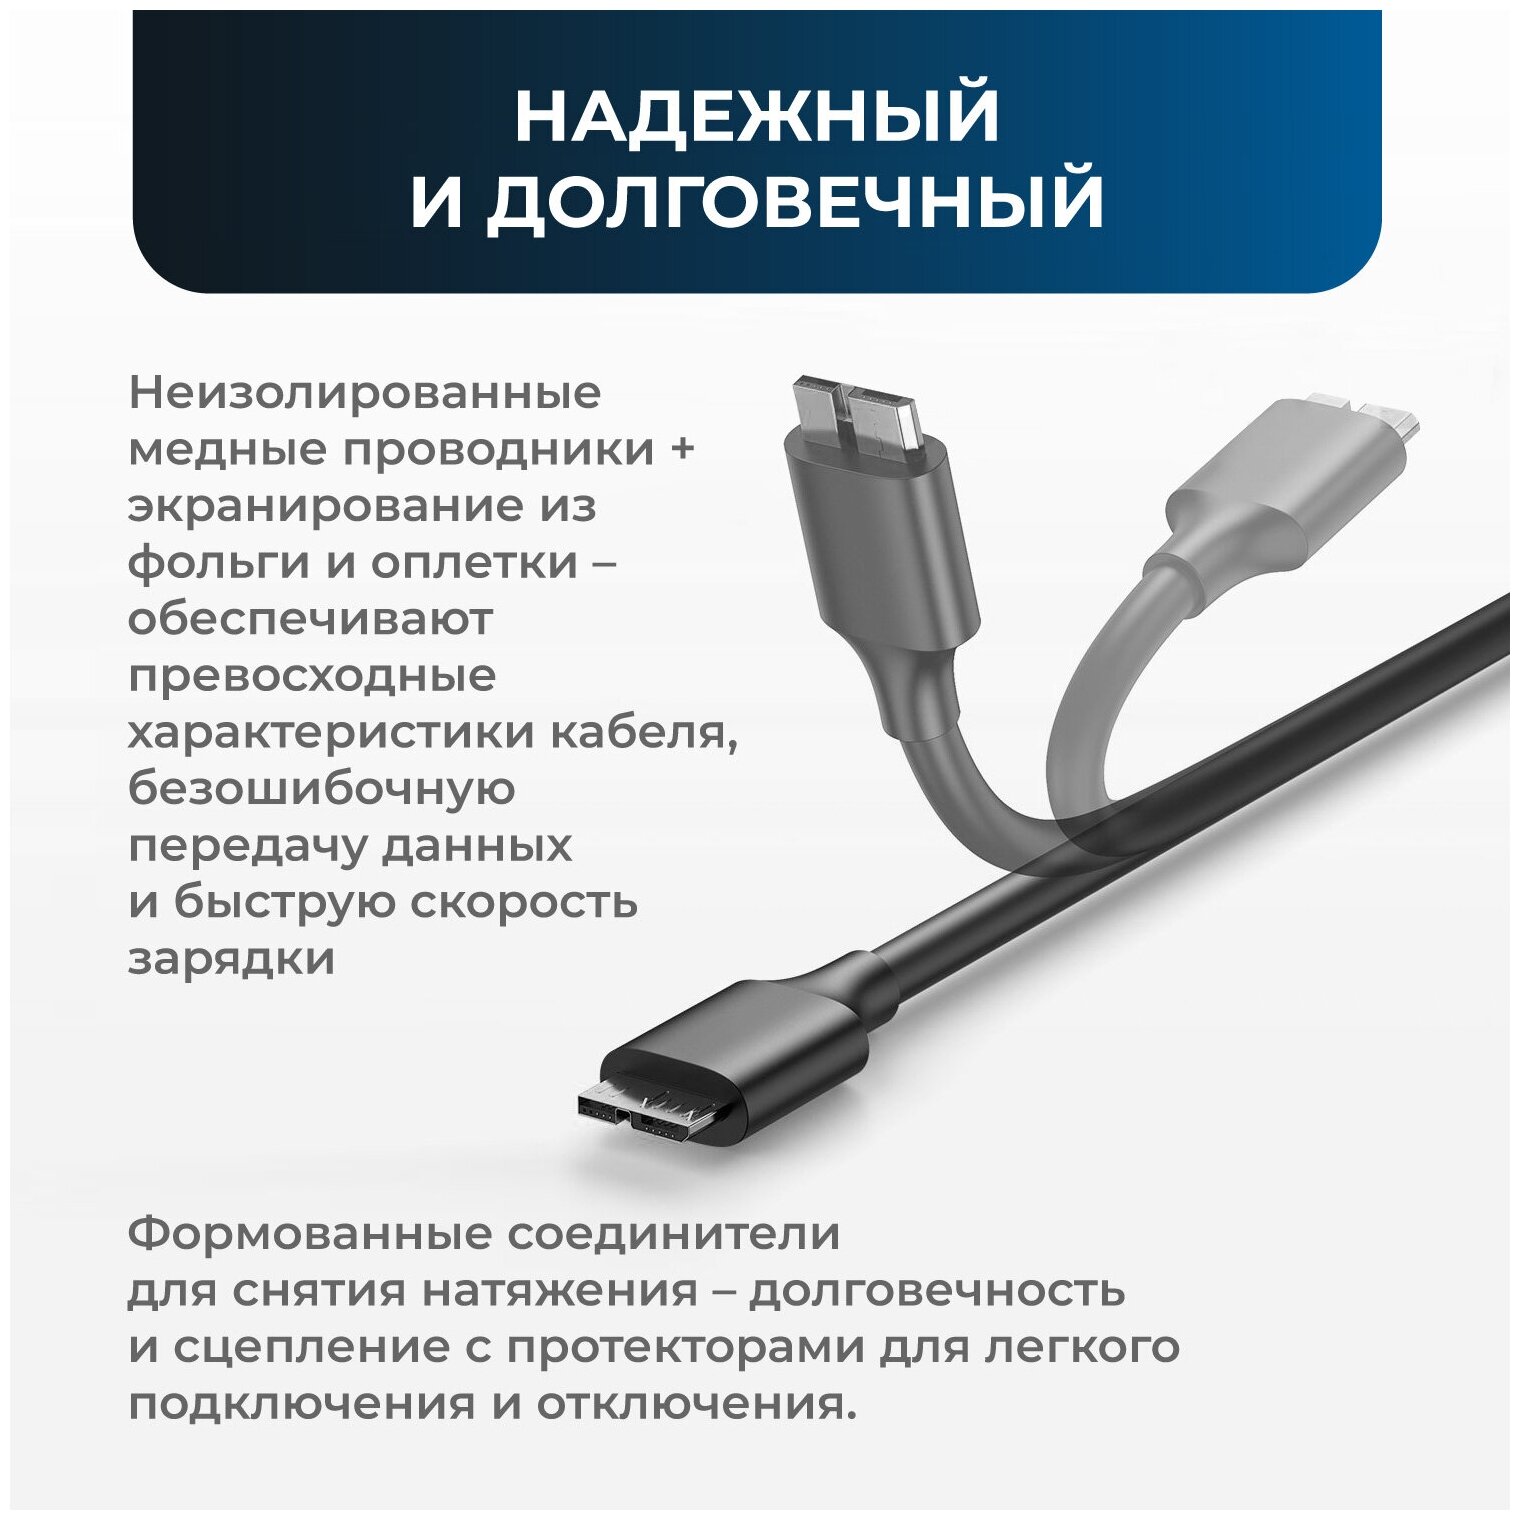 Аксессуар KS-is USB - MicroUSB B 30 10m KS-465-1